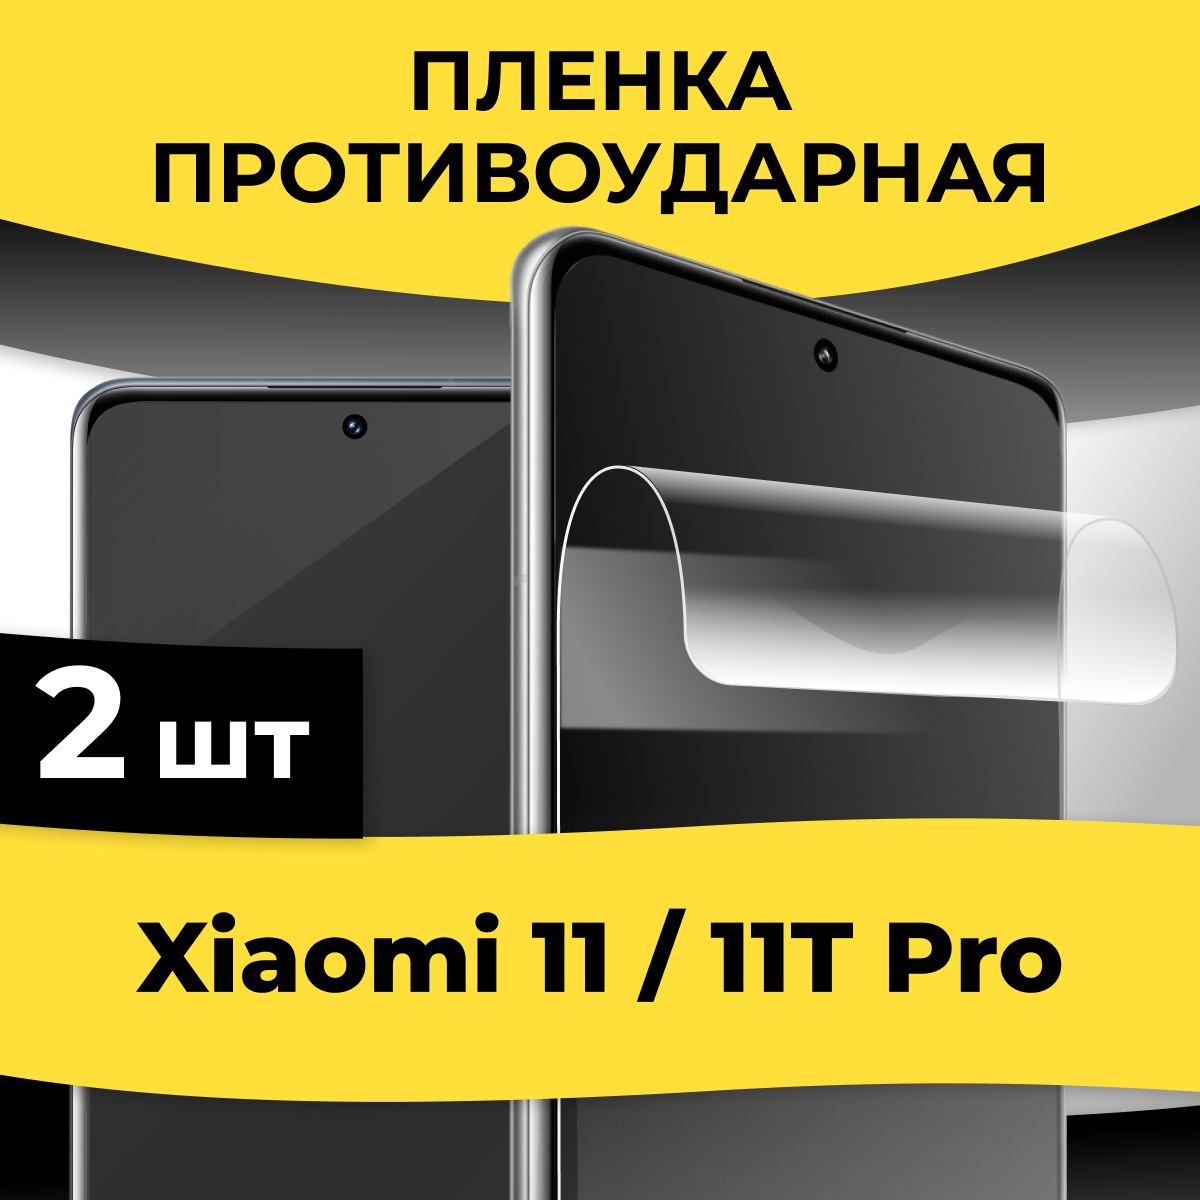 Комплект 2 шт. Глянцевая пленка для смартфона Xiaomi 11T и 11T Pro / Защитная пленка-стекло на телефон Сяоми 11Т и 11Т Про